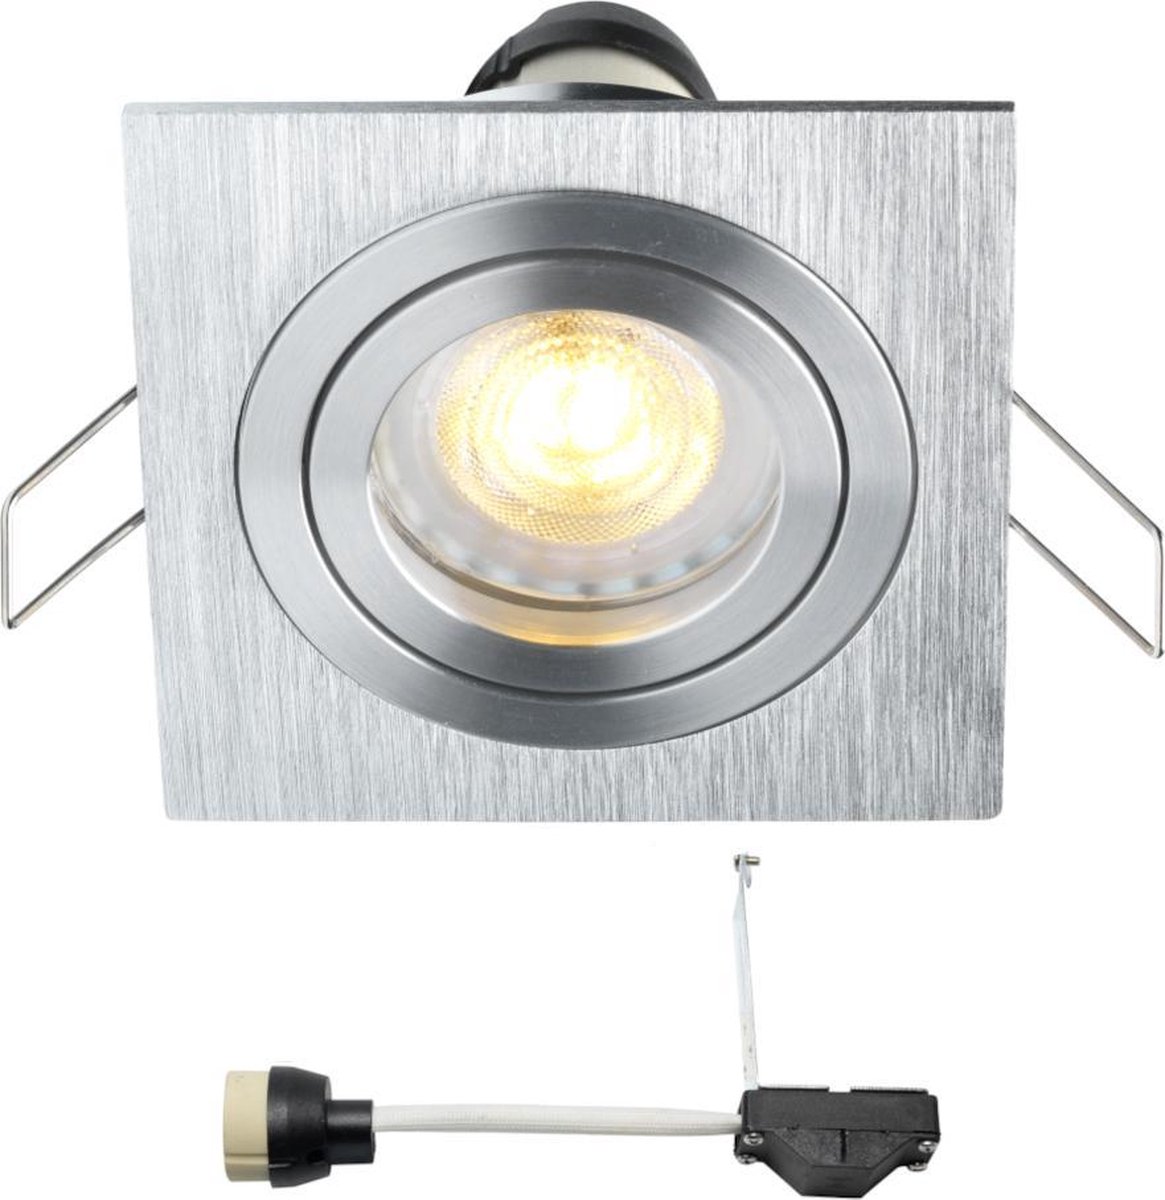 LED inbouwspot Coblux - inbouwspots / downlights / plafondspots - 4W / vierkant / dimbaar / kantelbaar / 230V / IP20 / warmwit